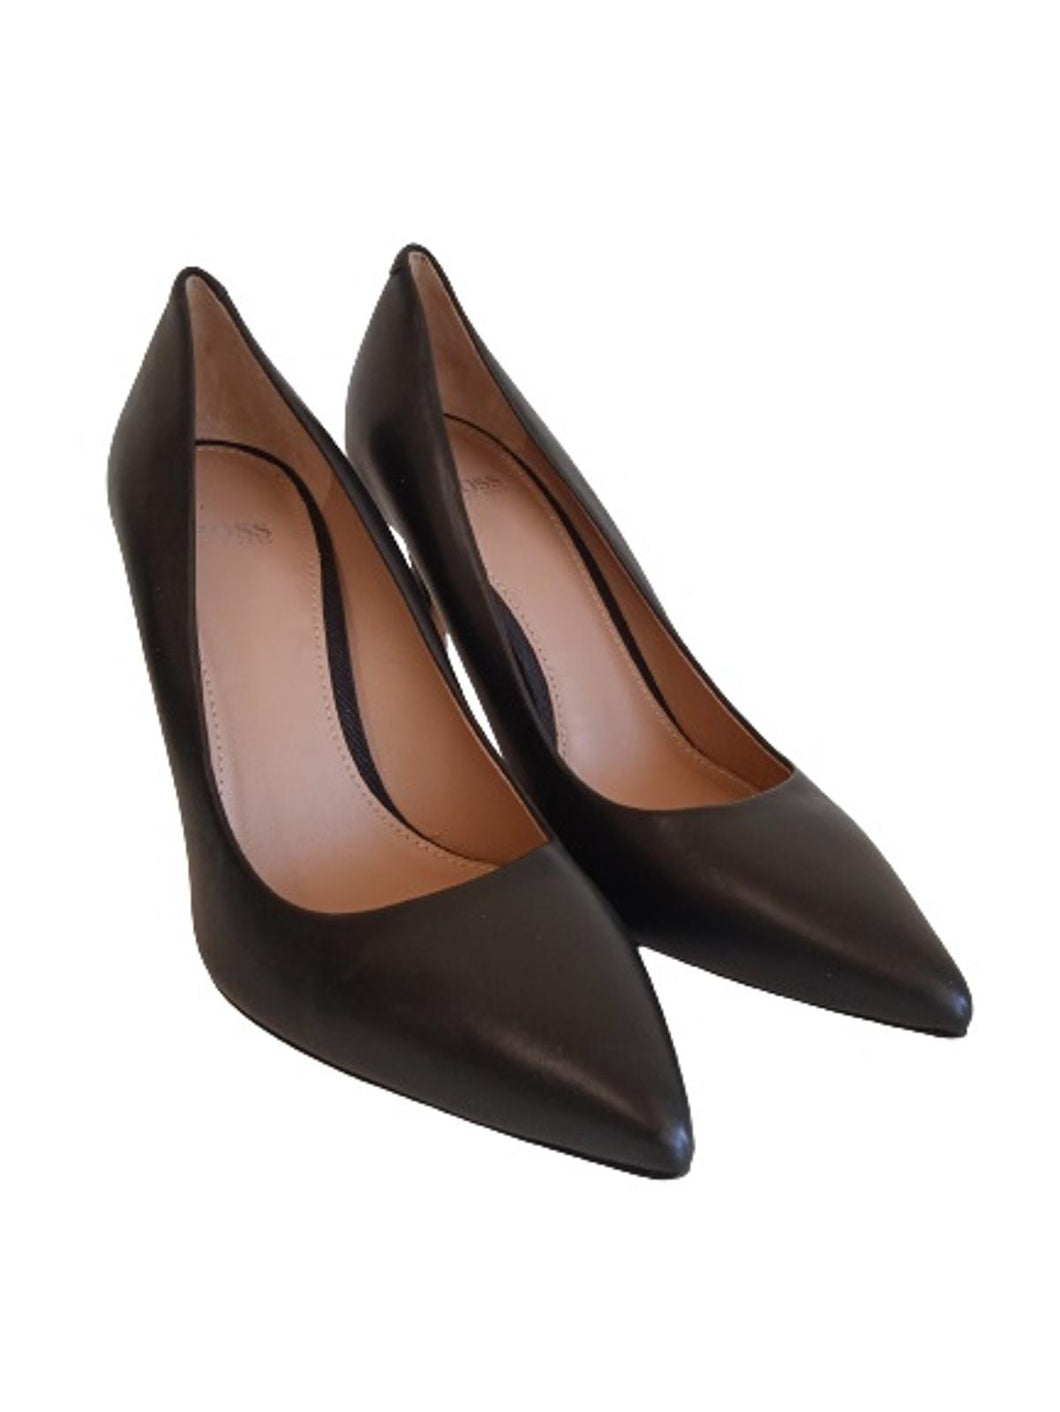 HUGO BOSS Ladies Black Leather Pointed Toe Stiletto Pump Shoes Size EU35 UK2